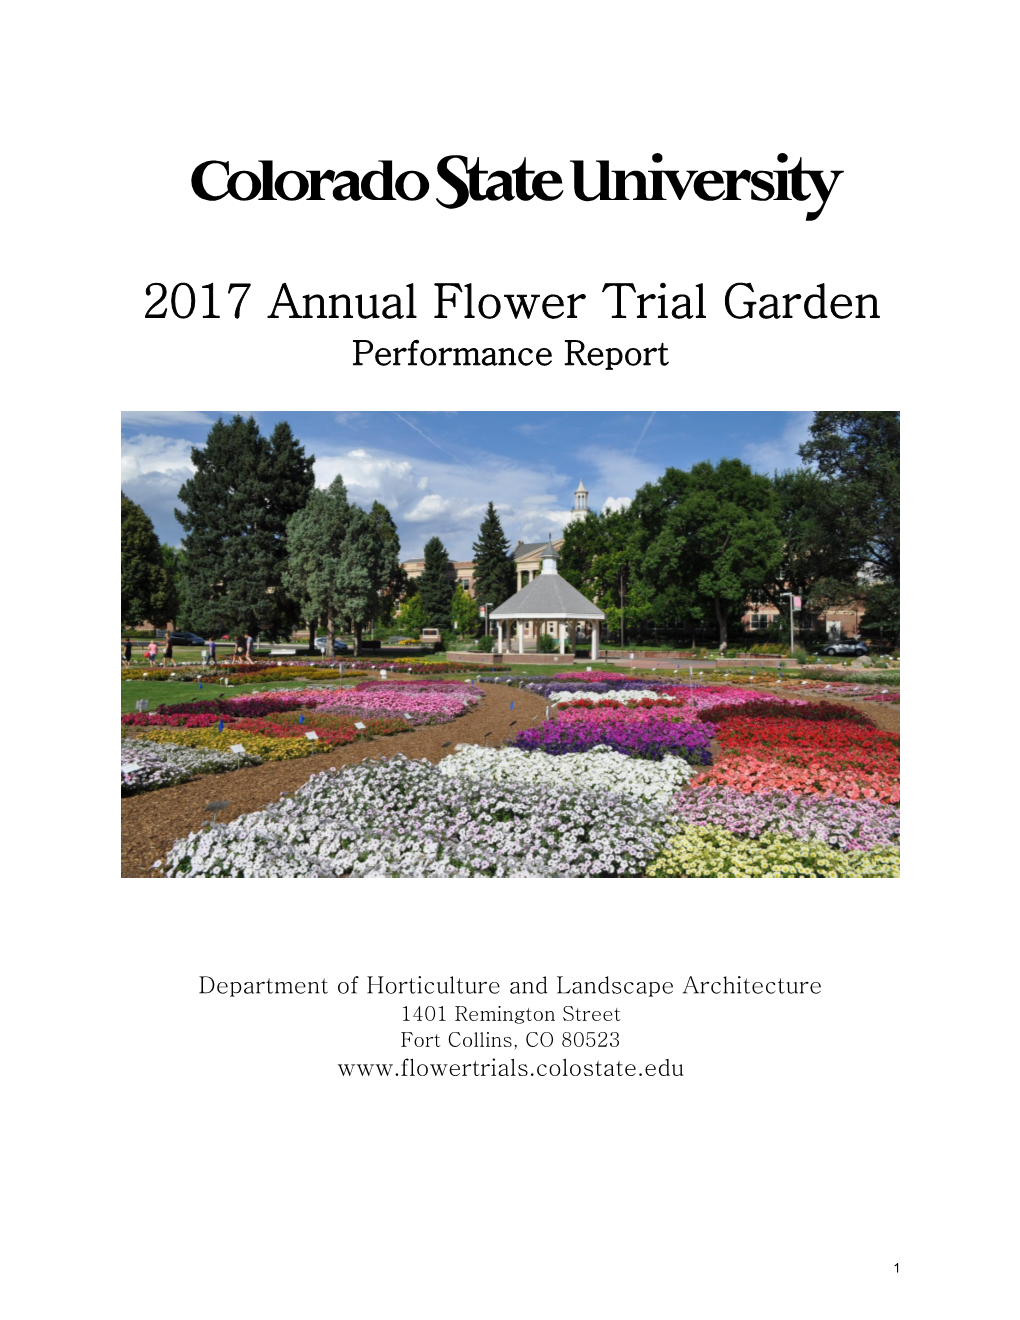 2017 Annual Flower Trial Garden Performance Report